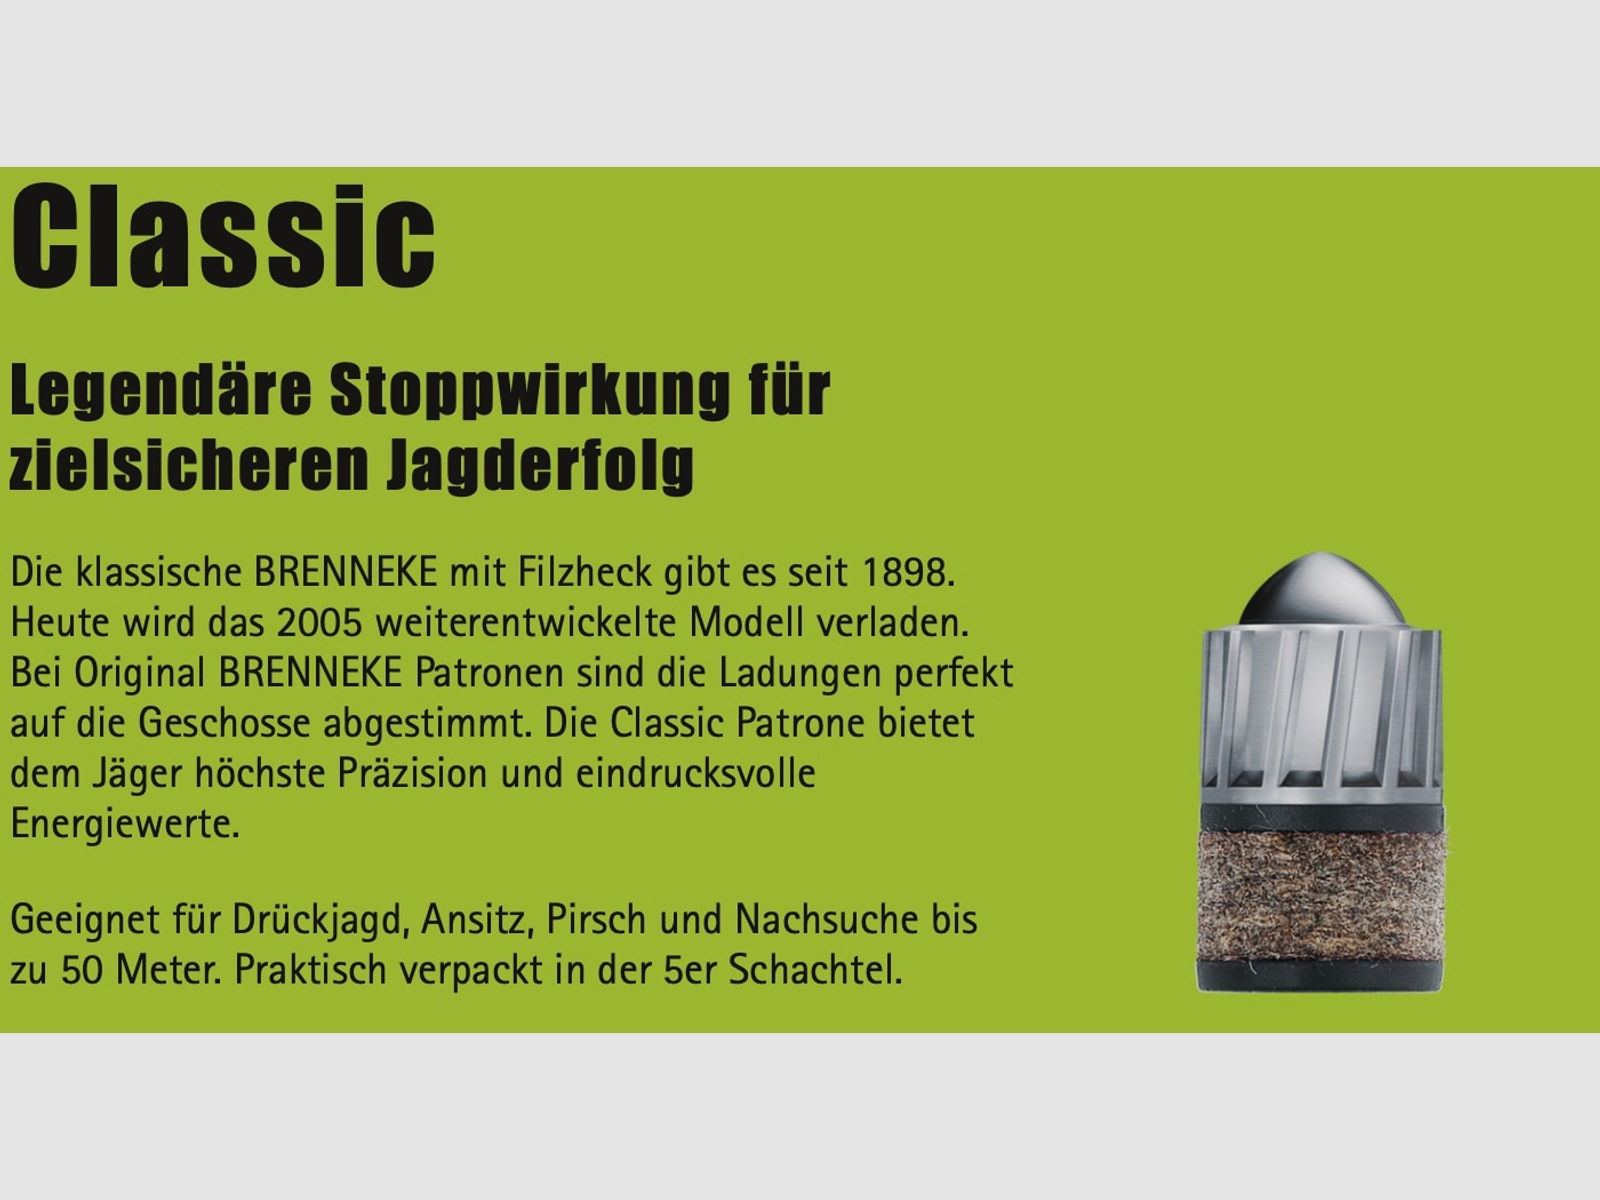 Brenneke 2004954 12/70 Classic 31,5g/490grs. Flintenlaufgeschoss